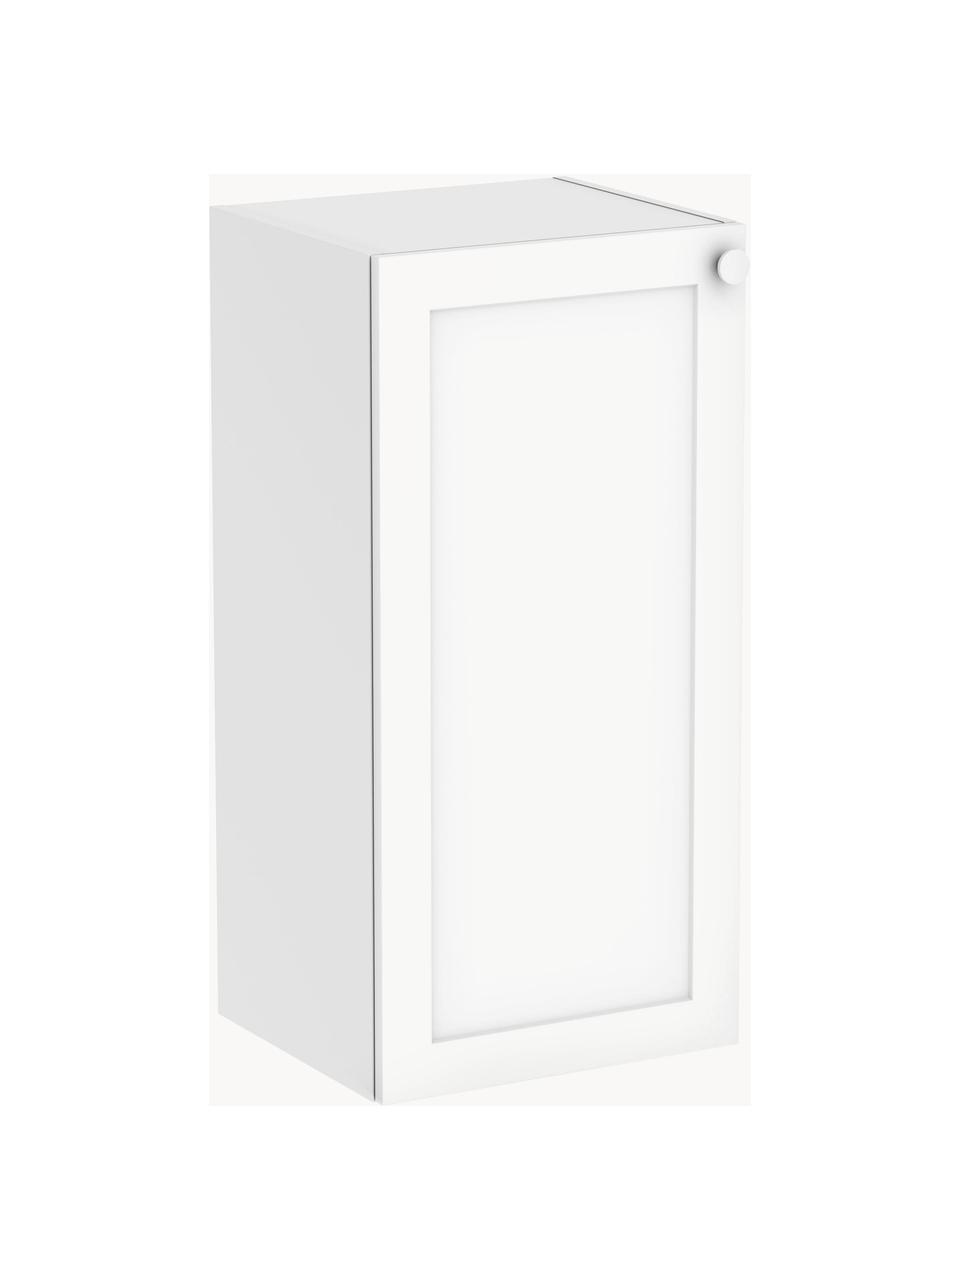 Nástěnná koupelnová skříňka Rafaella, Š 40 cm, Bílá, Š 42 cm, V 85 cm